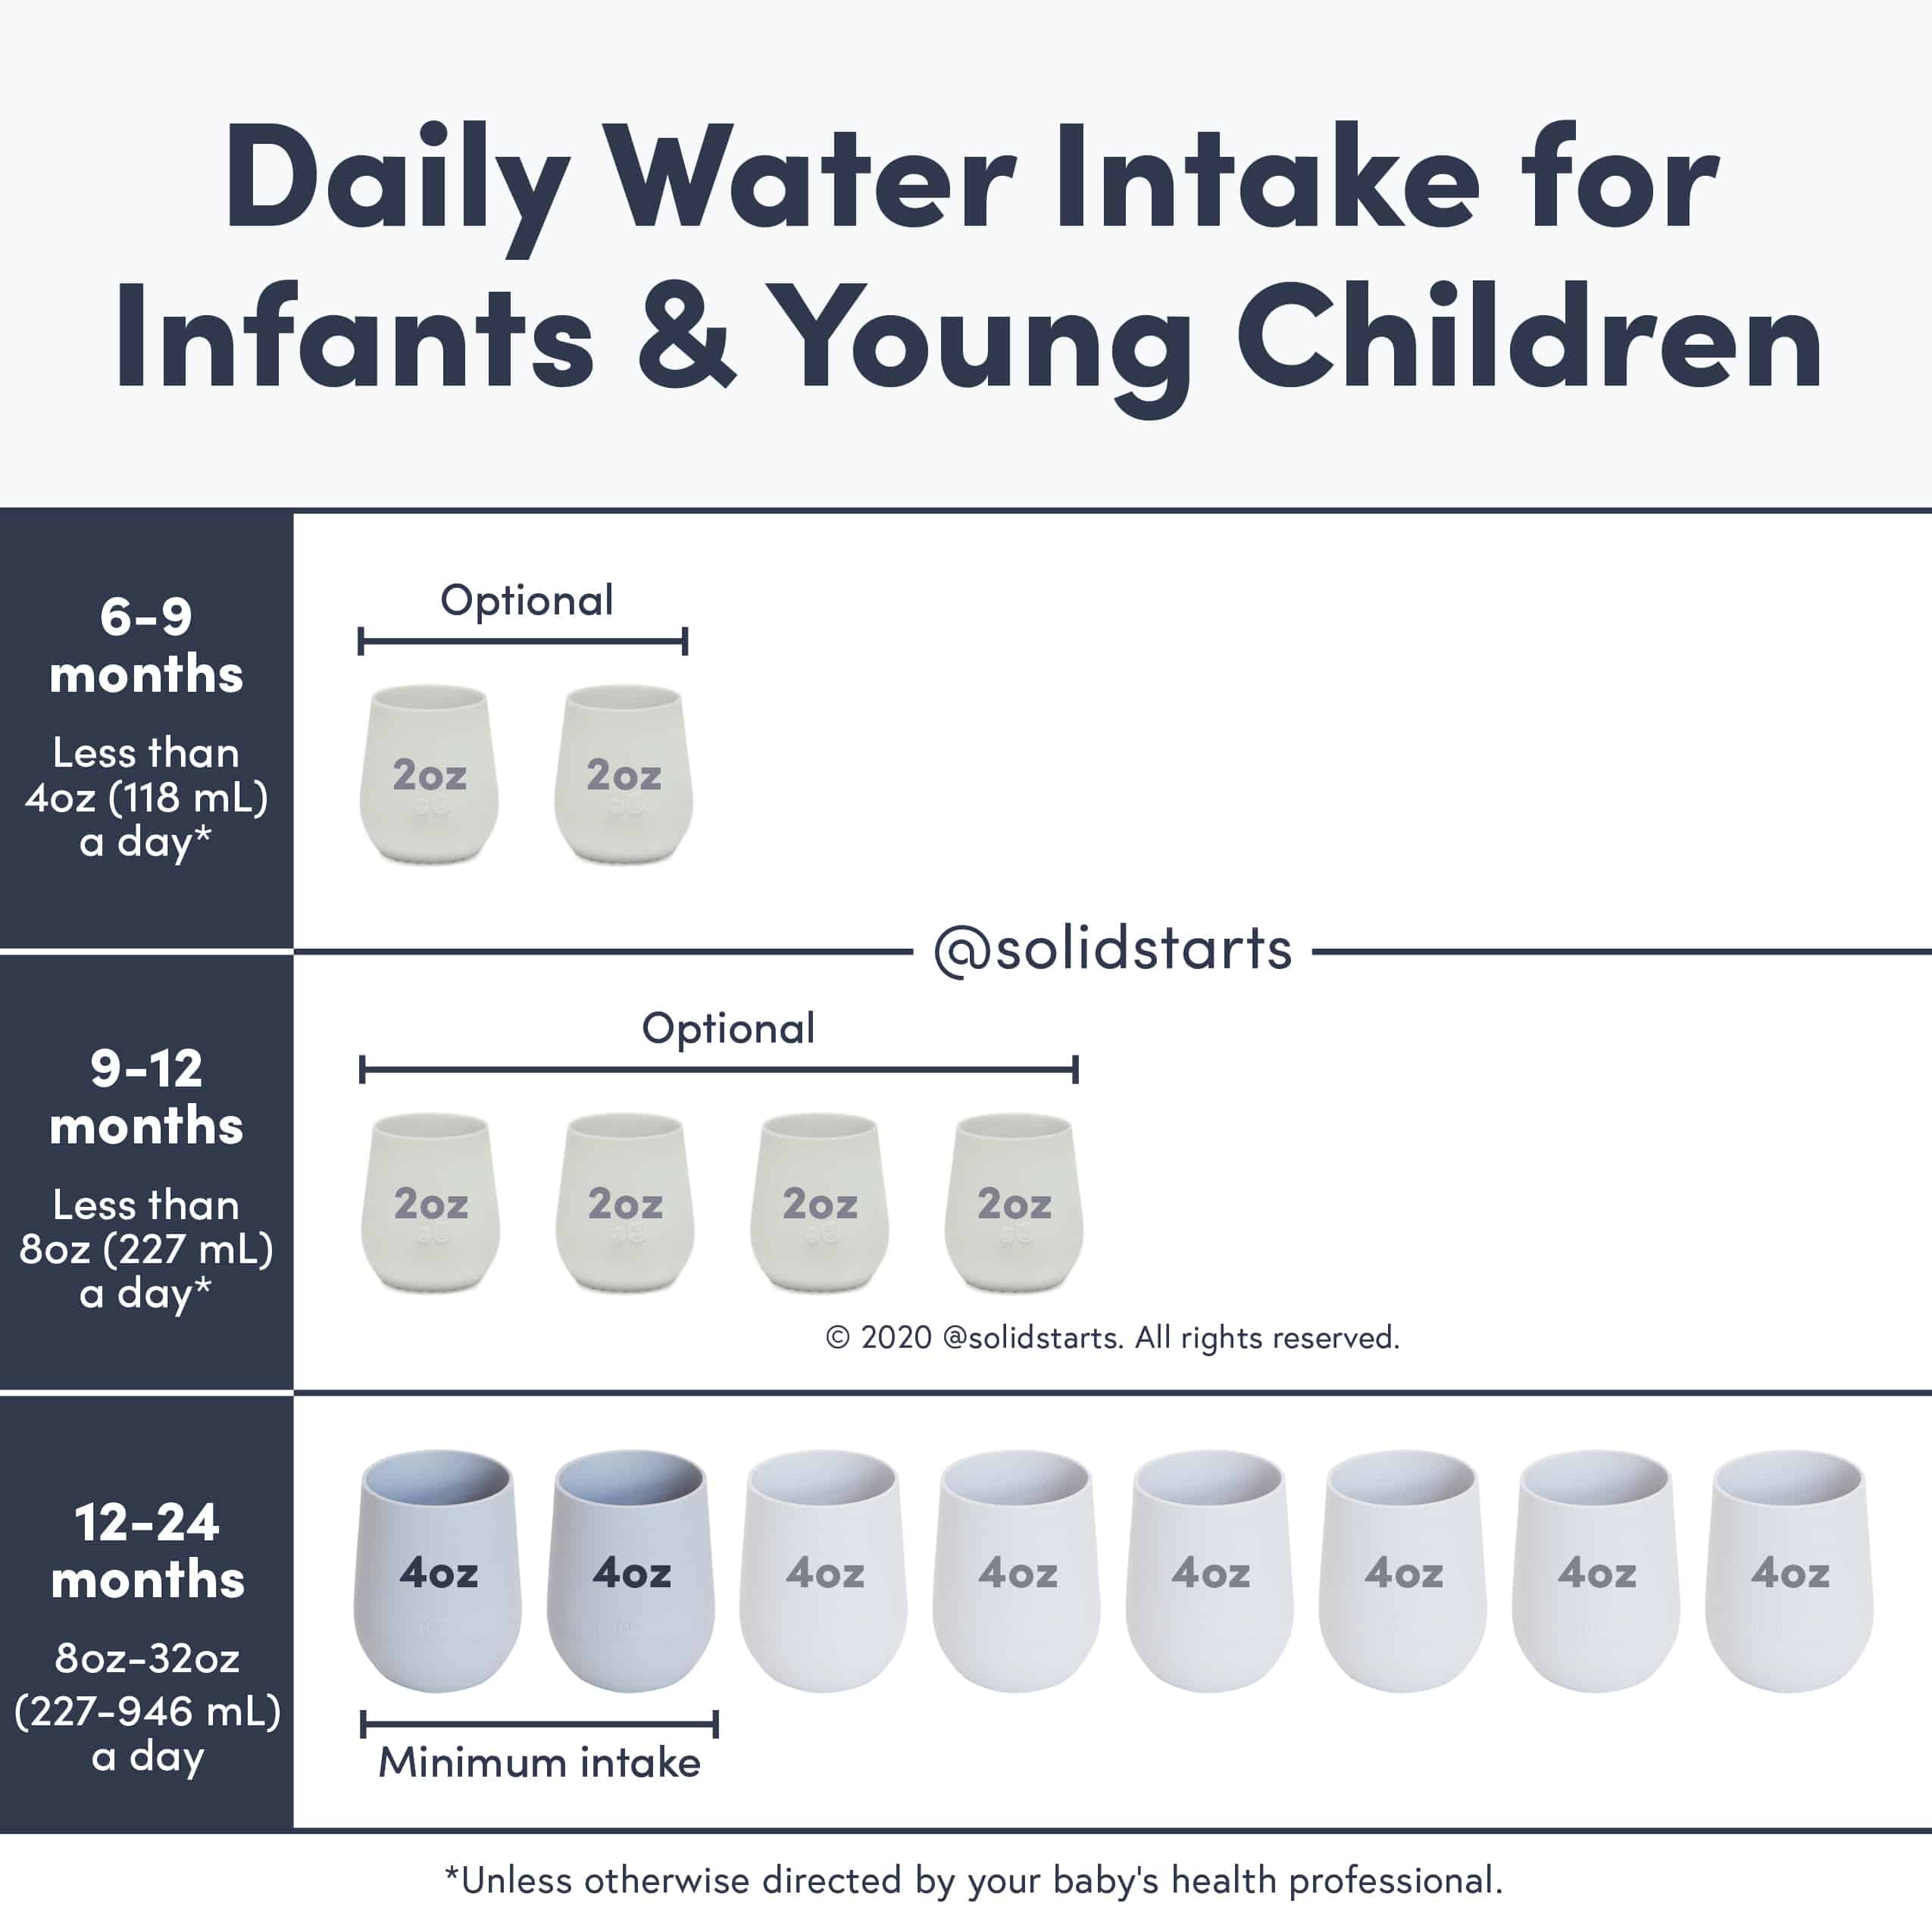 https://images.ctfassets.net/ruek9xr8ihvu/4k36MsmmorvnnuqObwazsw/284a0b7629584fde434914c4e6375d9e/Daily-Water-Intake-for-Infants-and-Young-Children-1.jpg